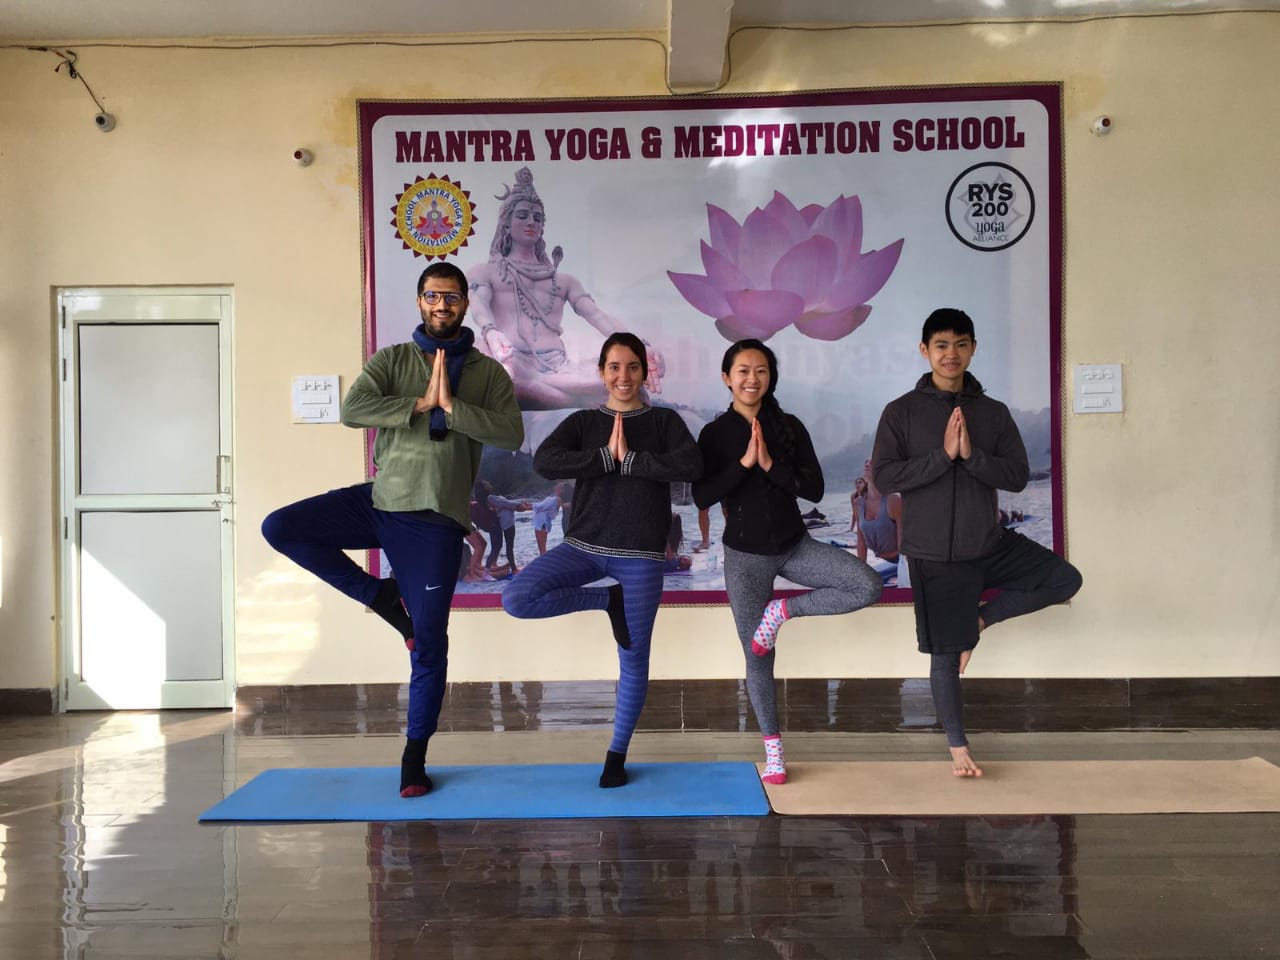 YOGASANA CHART (YOGA) | Standing yoga poses, Standing yoga, Yoga poses chart